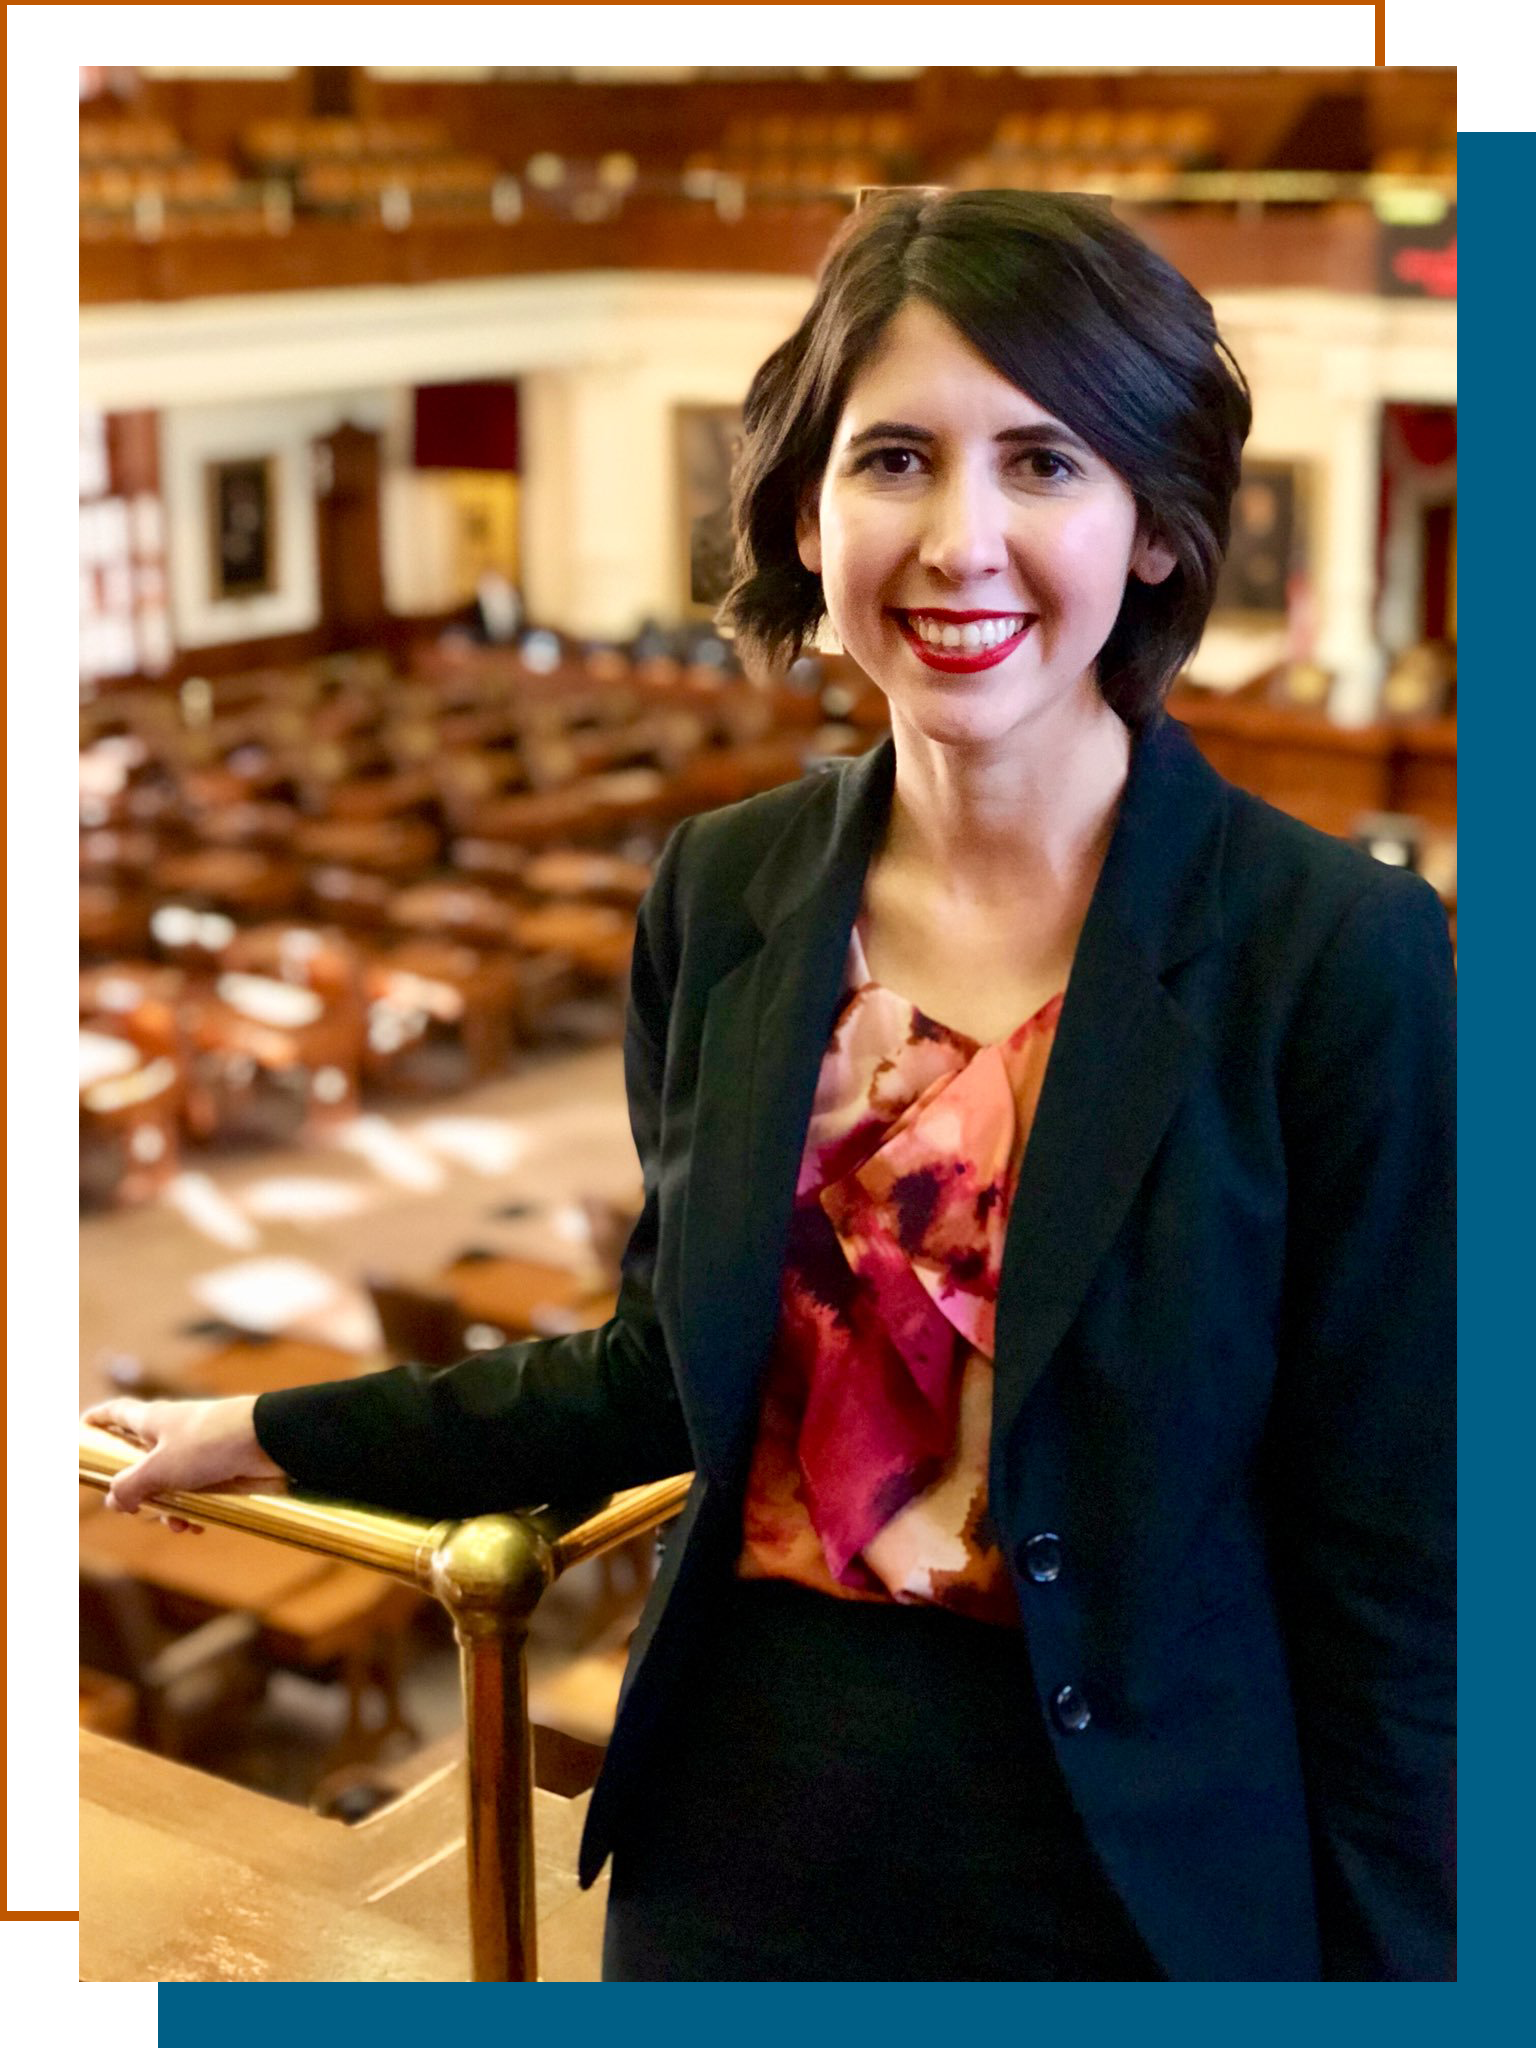 An LBJ Student posing inside the Texas Legislature chamber